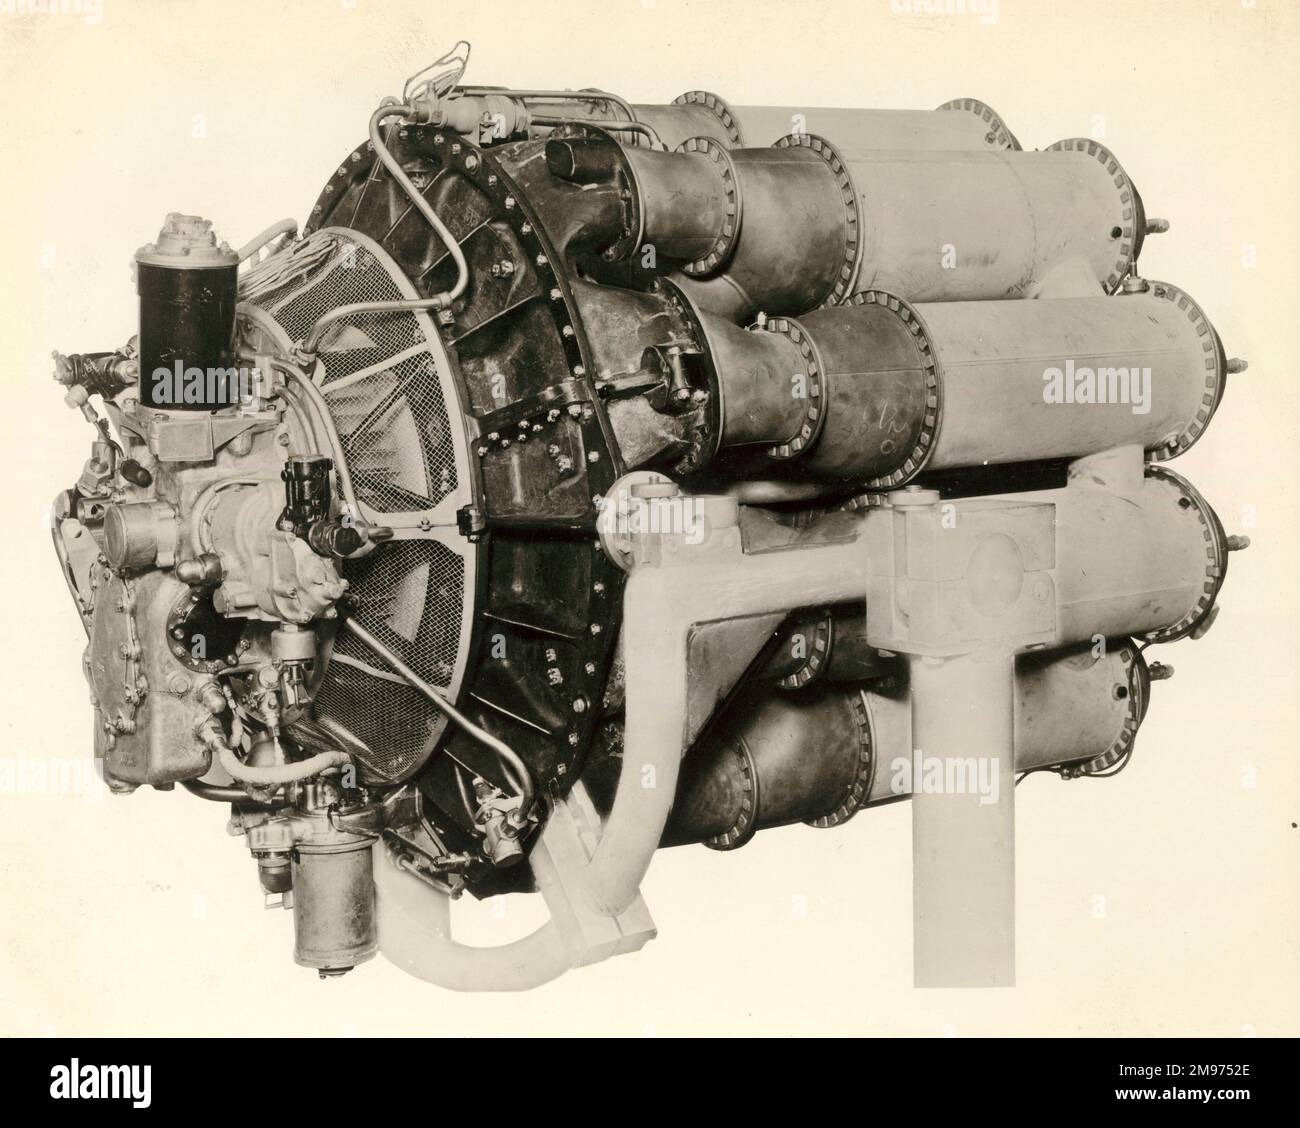 Rolls-Royce Welland turbojet. Stock Photo